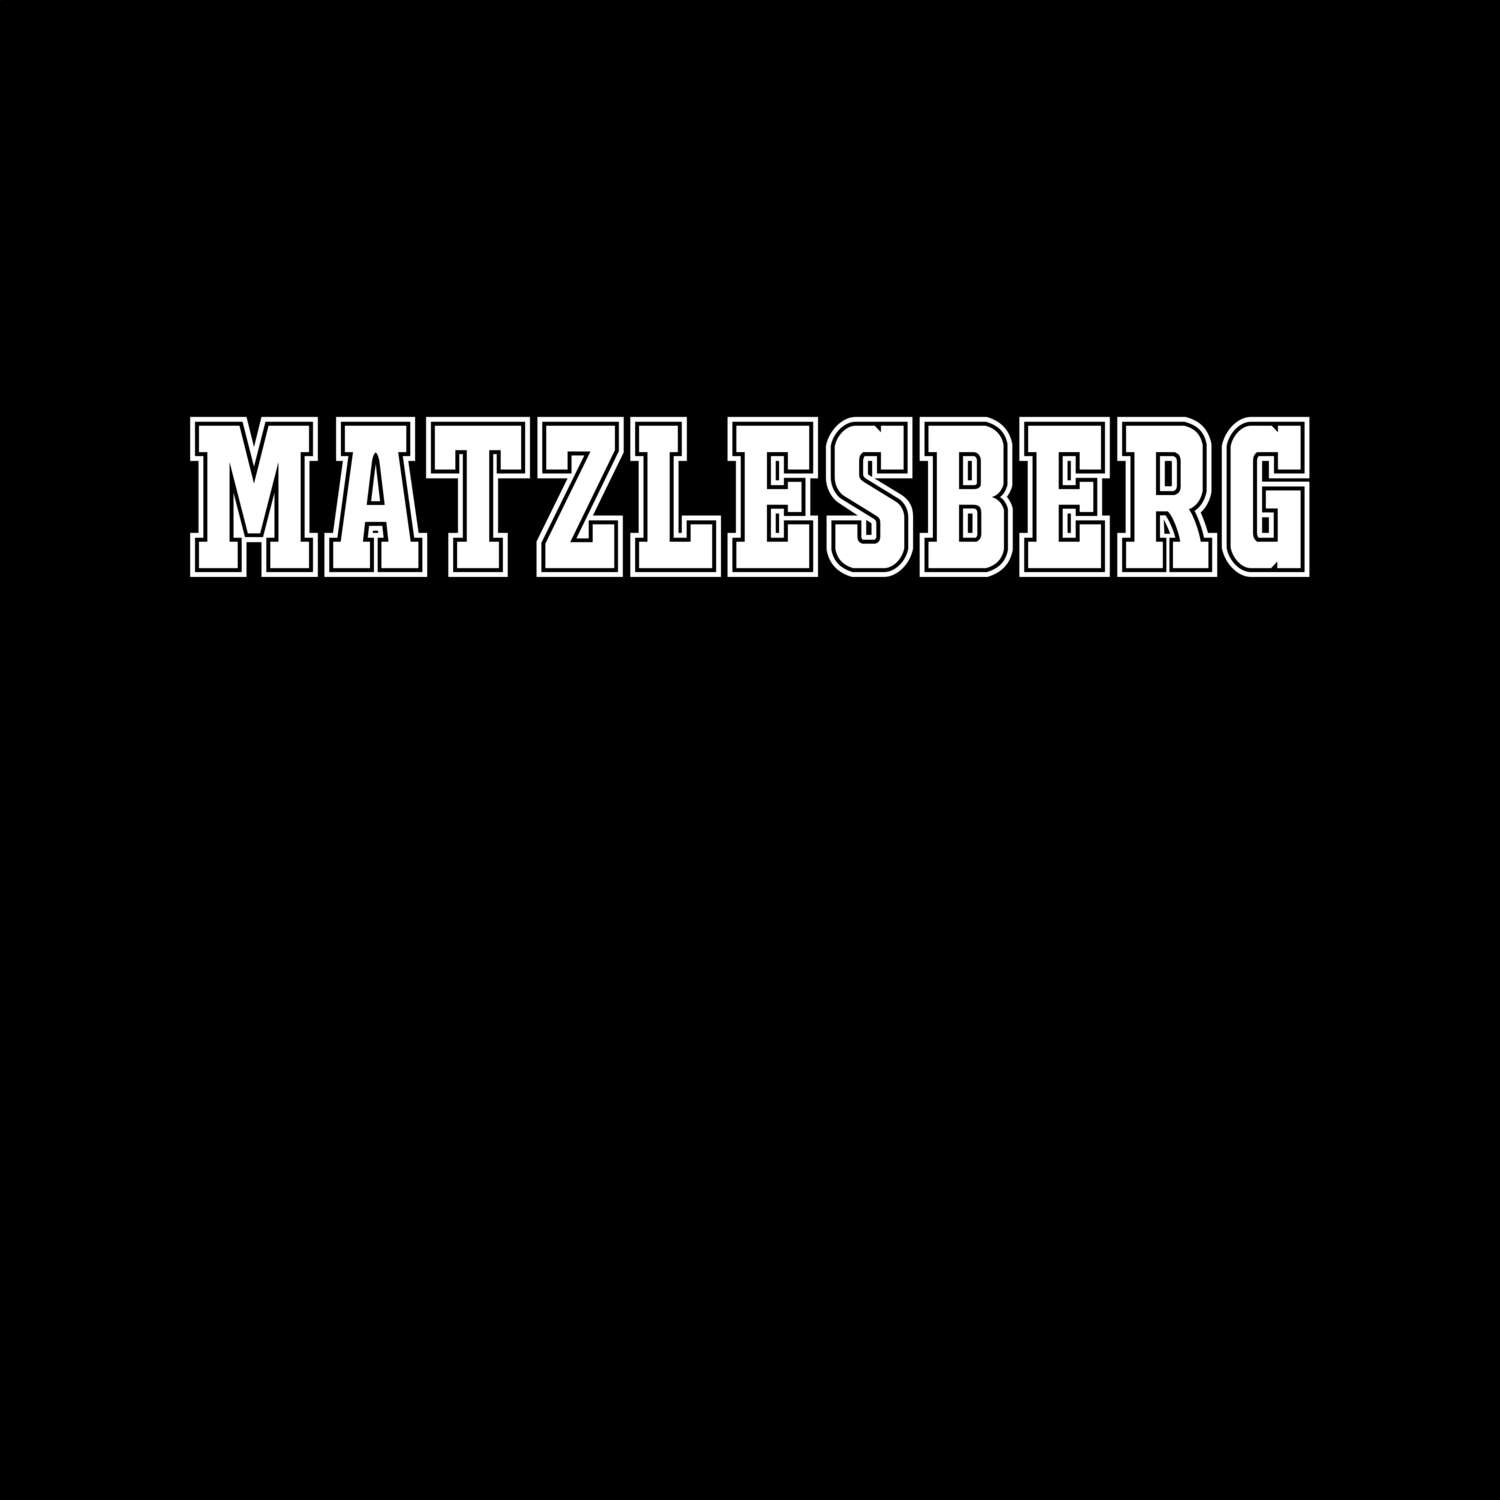 Matzlesberg T-Shirt »Classic«